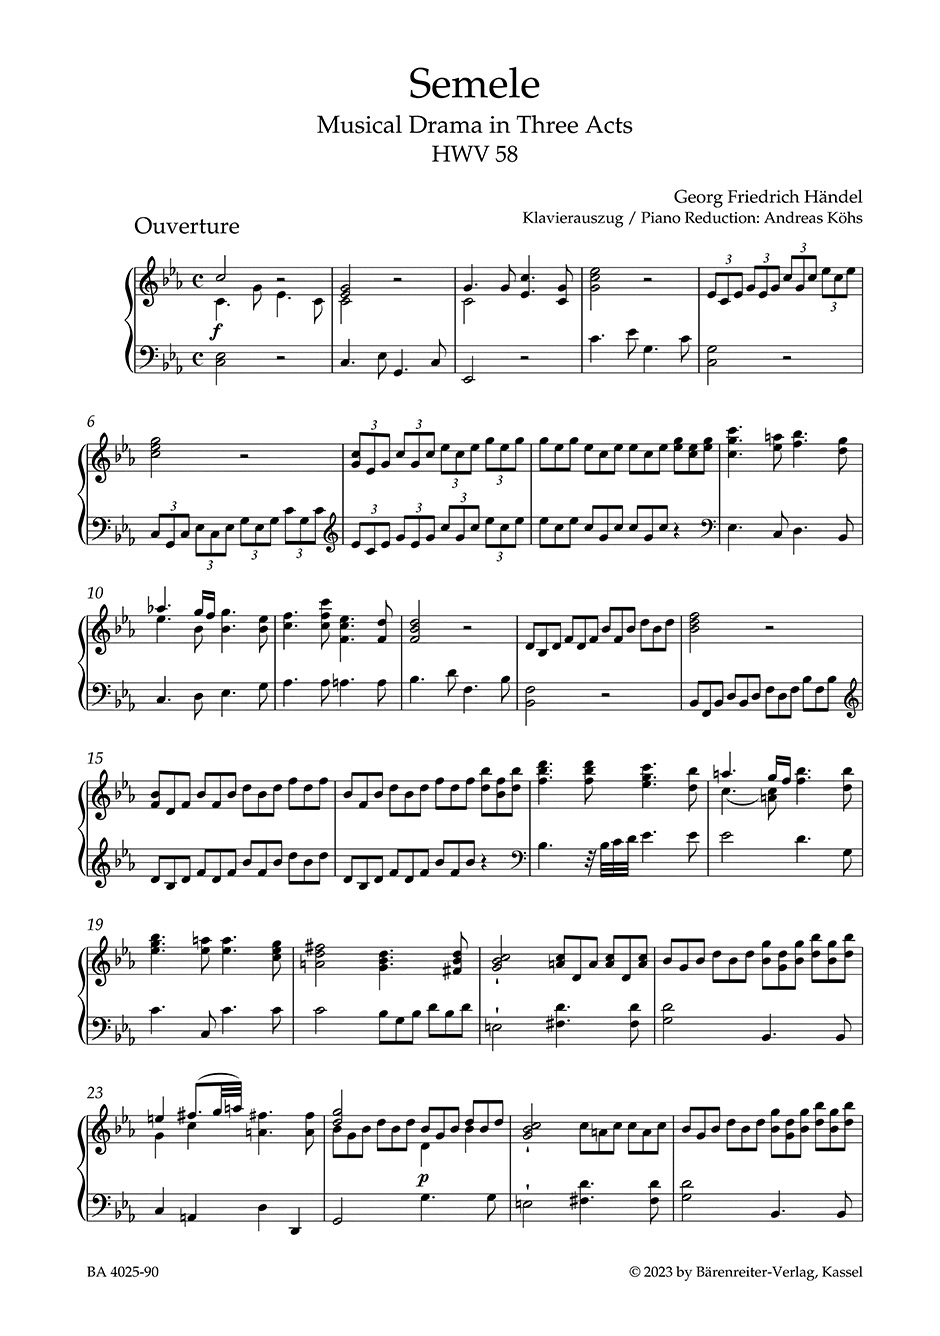 handel-semele-canto-pianoforte-barenreiter1